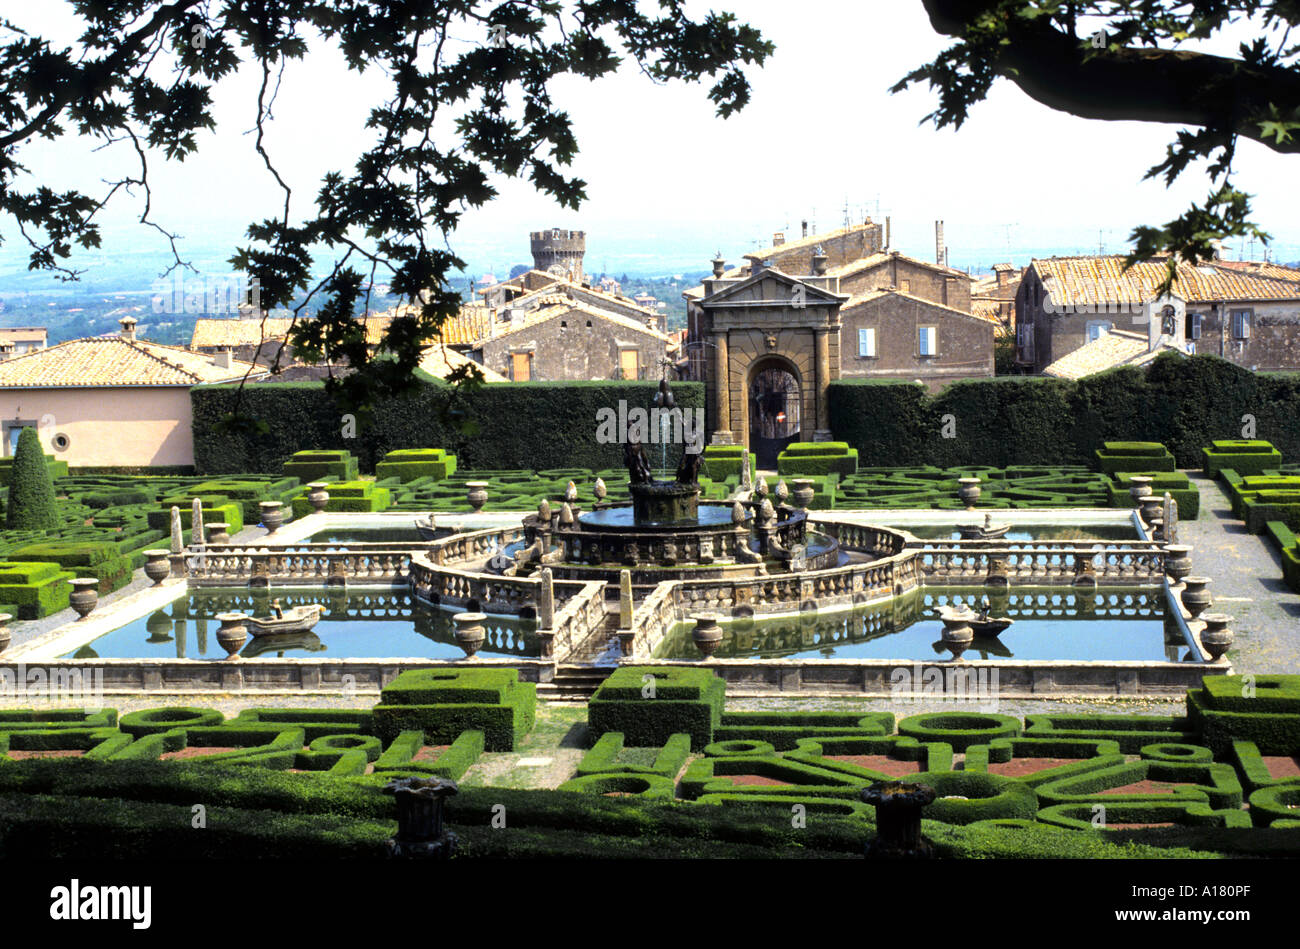 Italien-Latium-Garten Villa Lante in Bagnaia Italien Neptunbrunnen Wasser Pflanzen und Gartenbau, Flucht, Europa, europäische, E Stockfoto